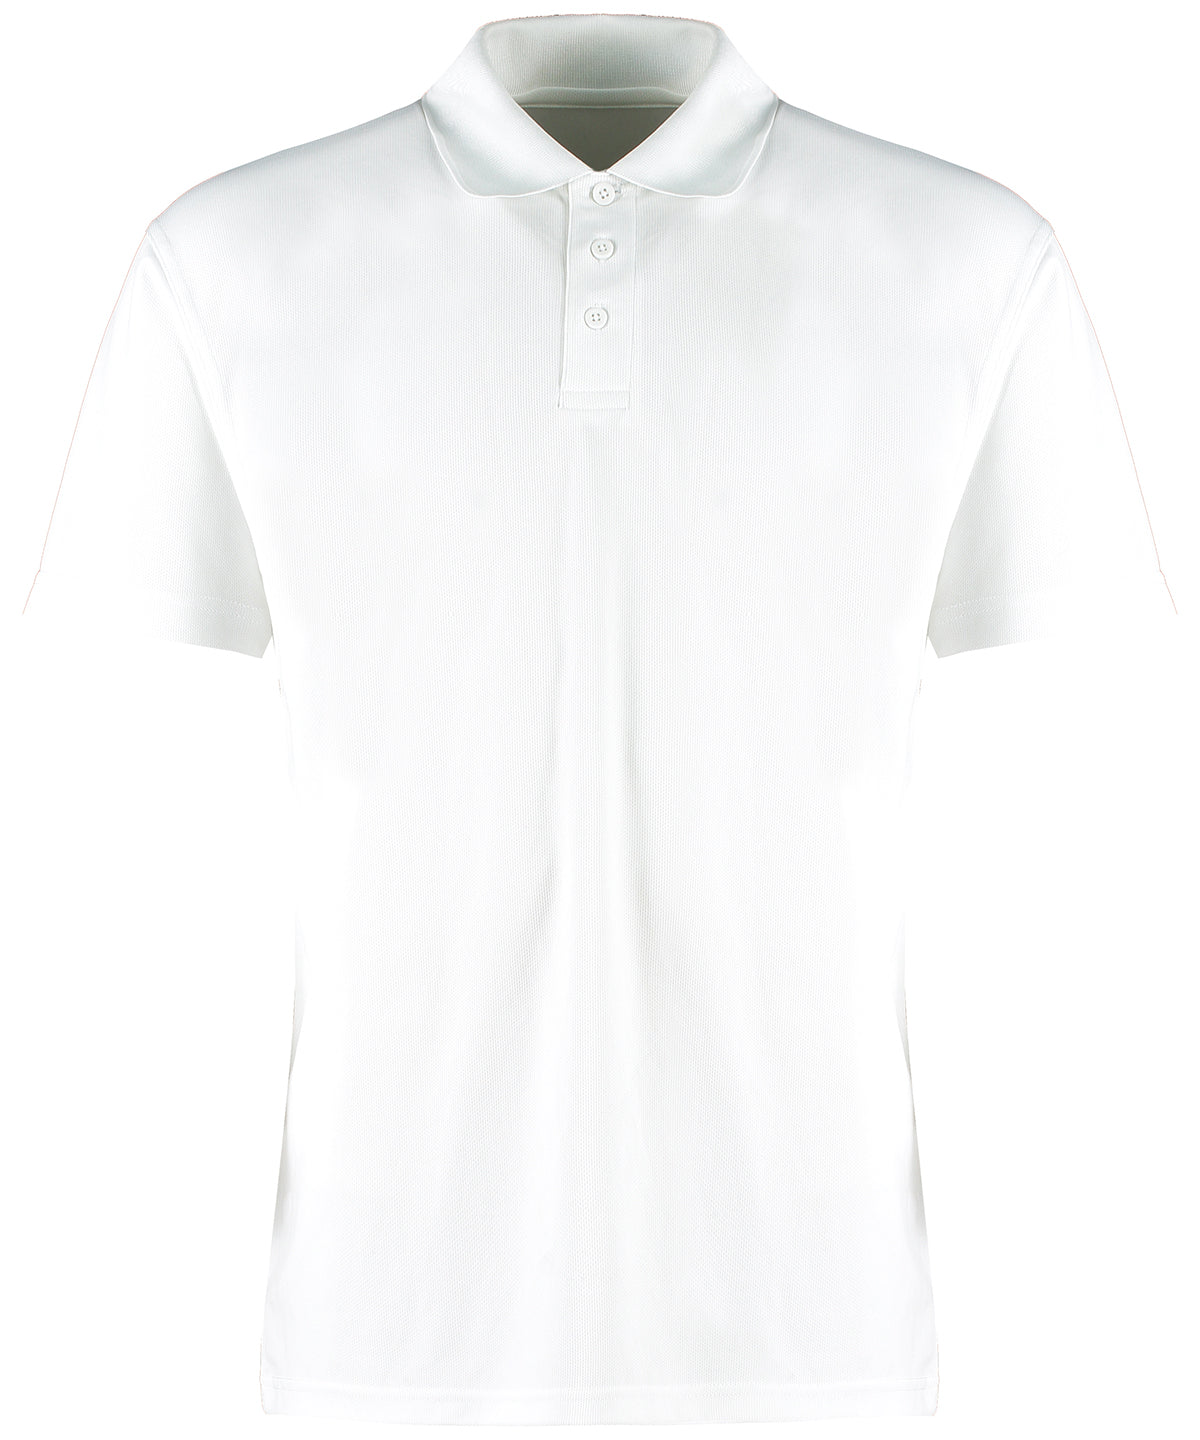 Personalised Polo Shirts - Black Kustom Kit Regular fit Cooltex® plus micro mesh polo